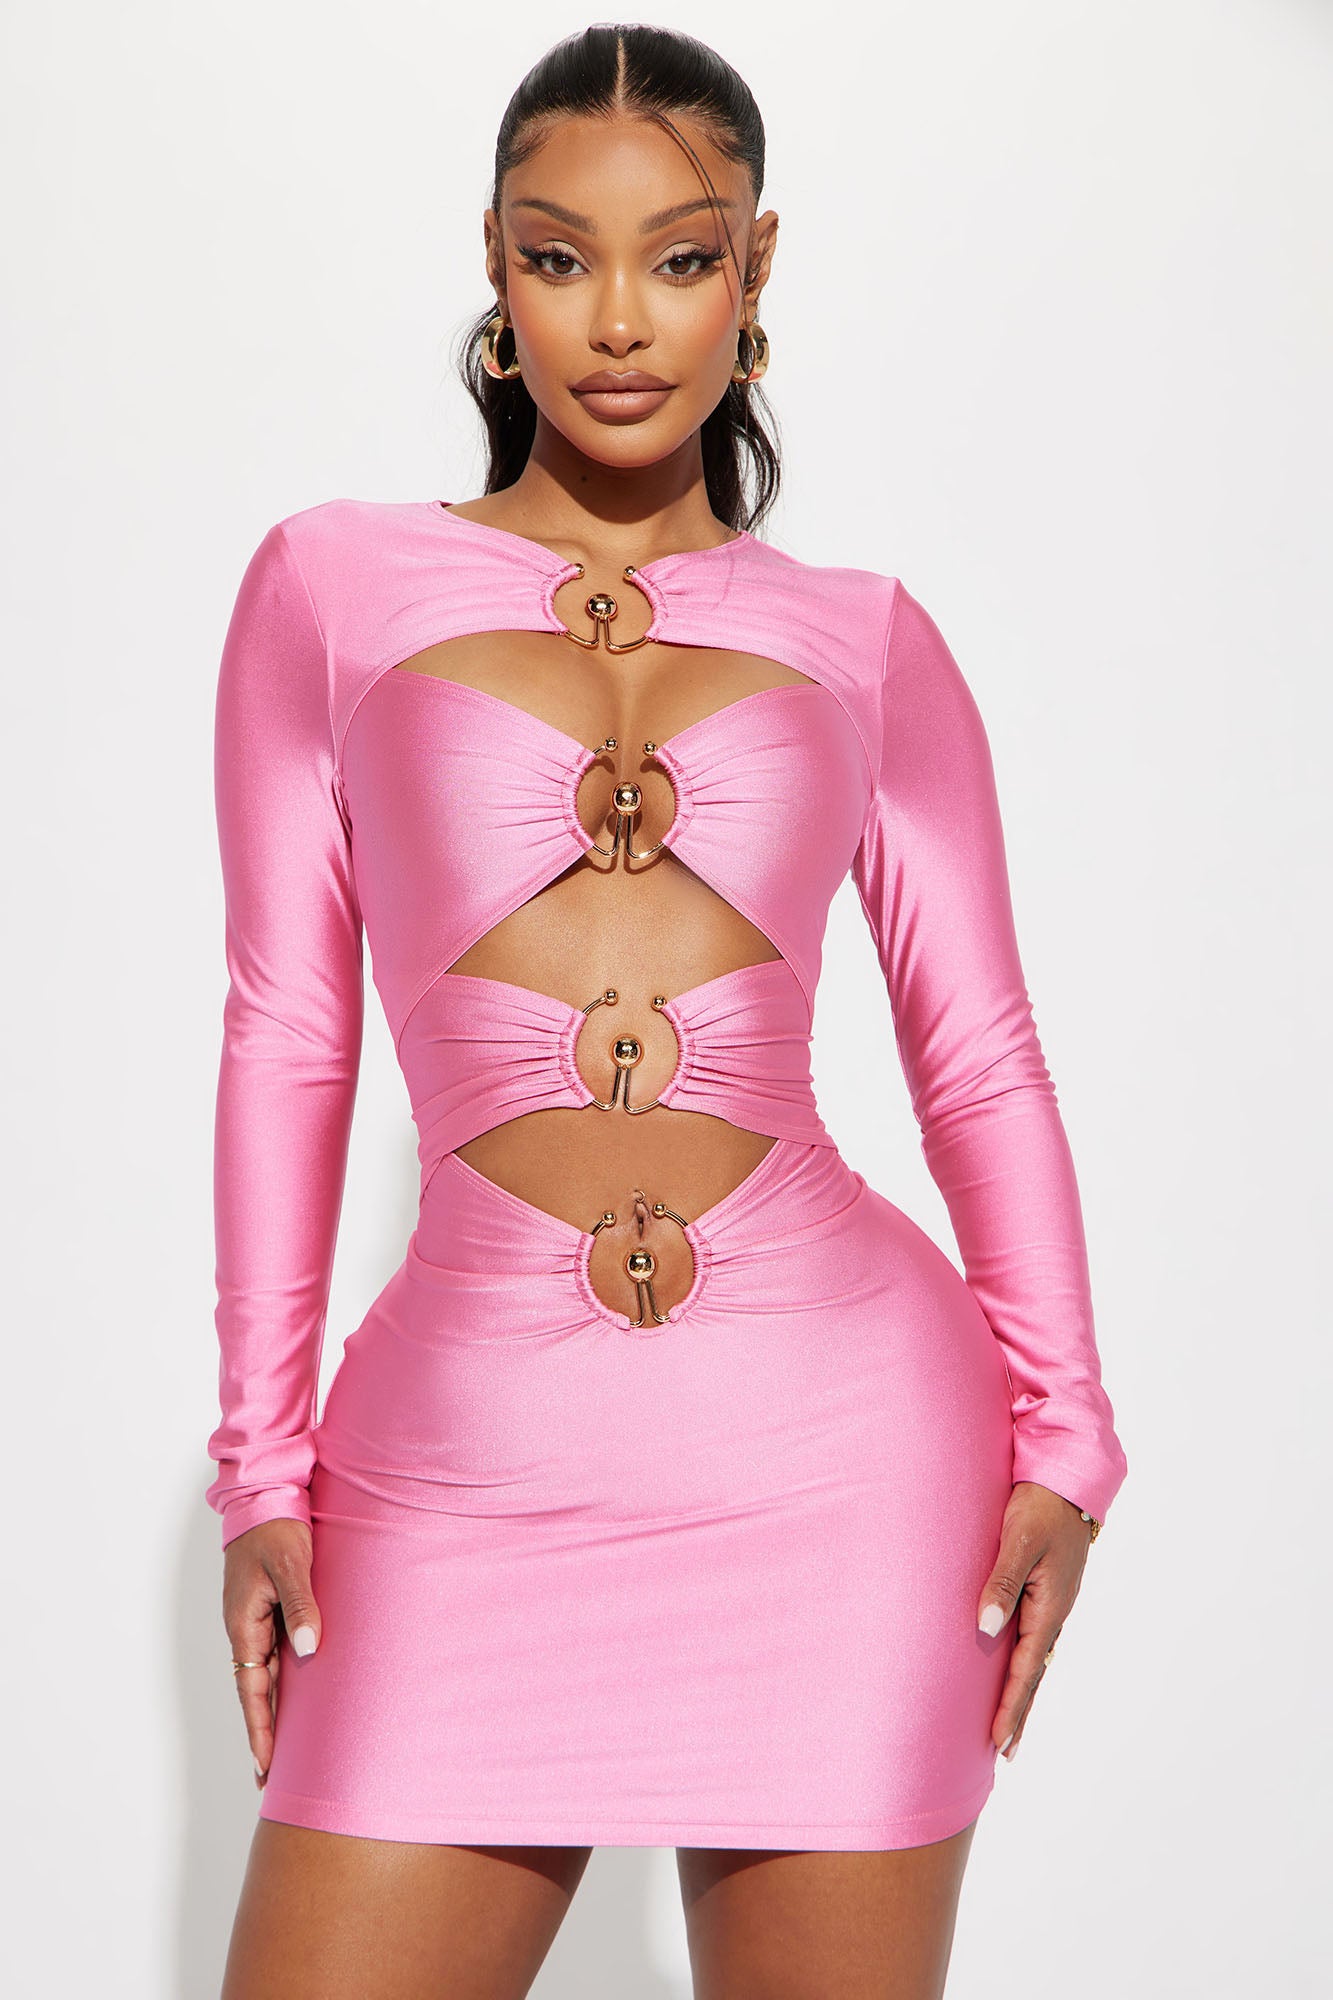 fashion nova pink dress